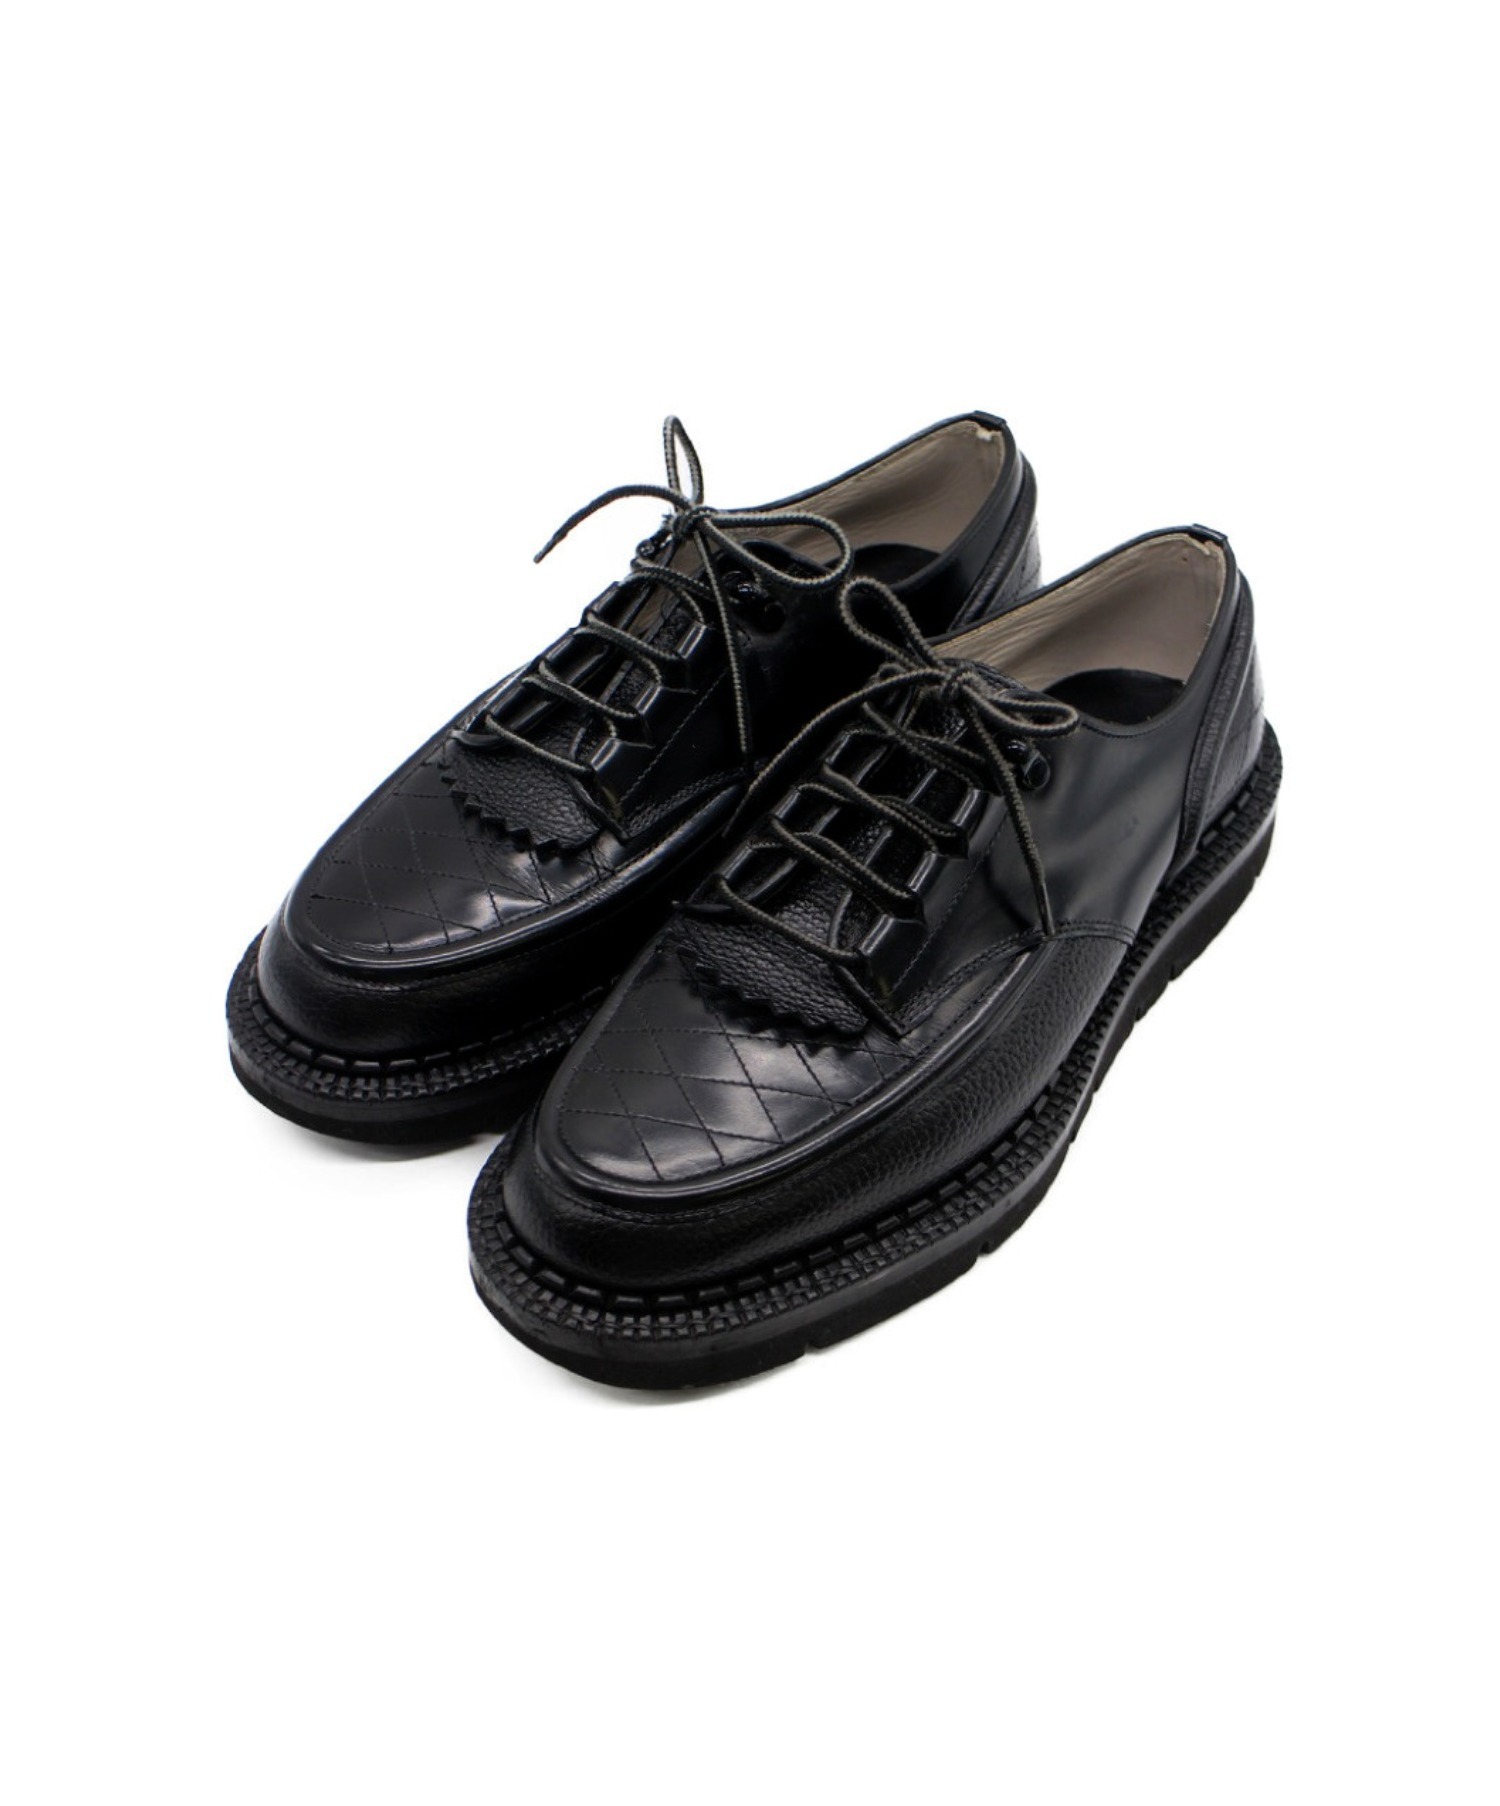 foot the coacher (フットザコーチャー) カオスシューズ ブラック サイズ:8 FTC1634018 chaos shoes